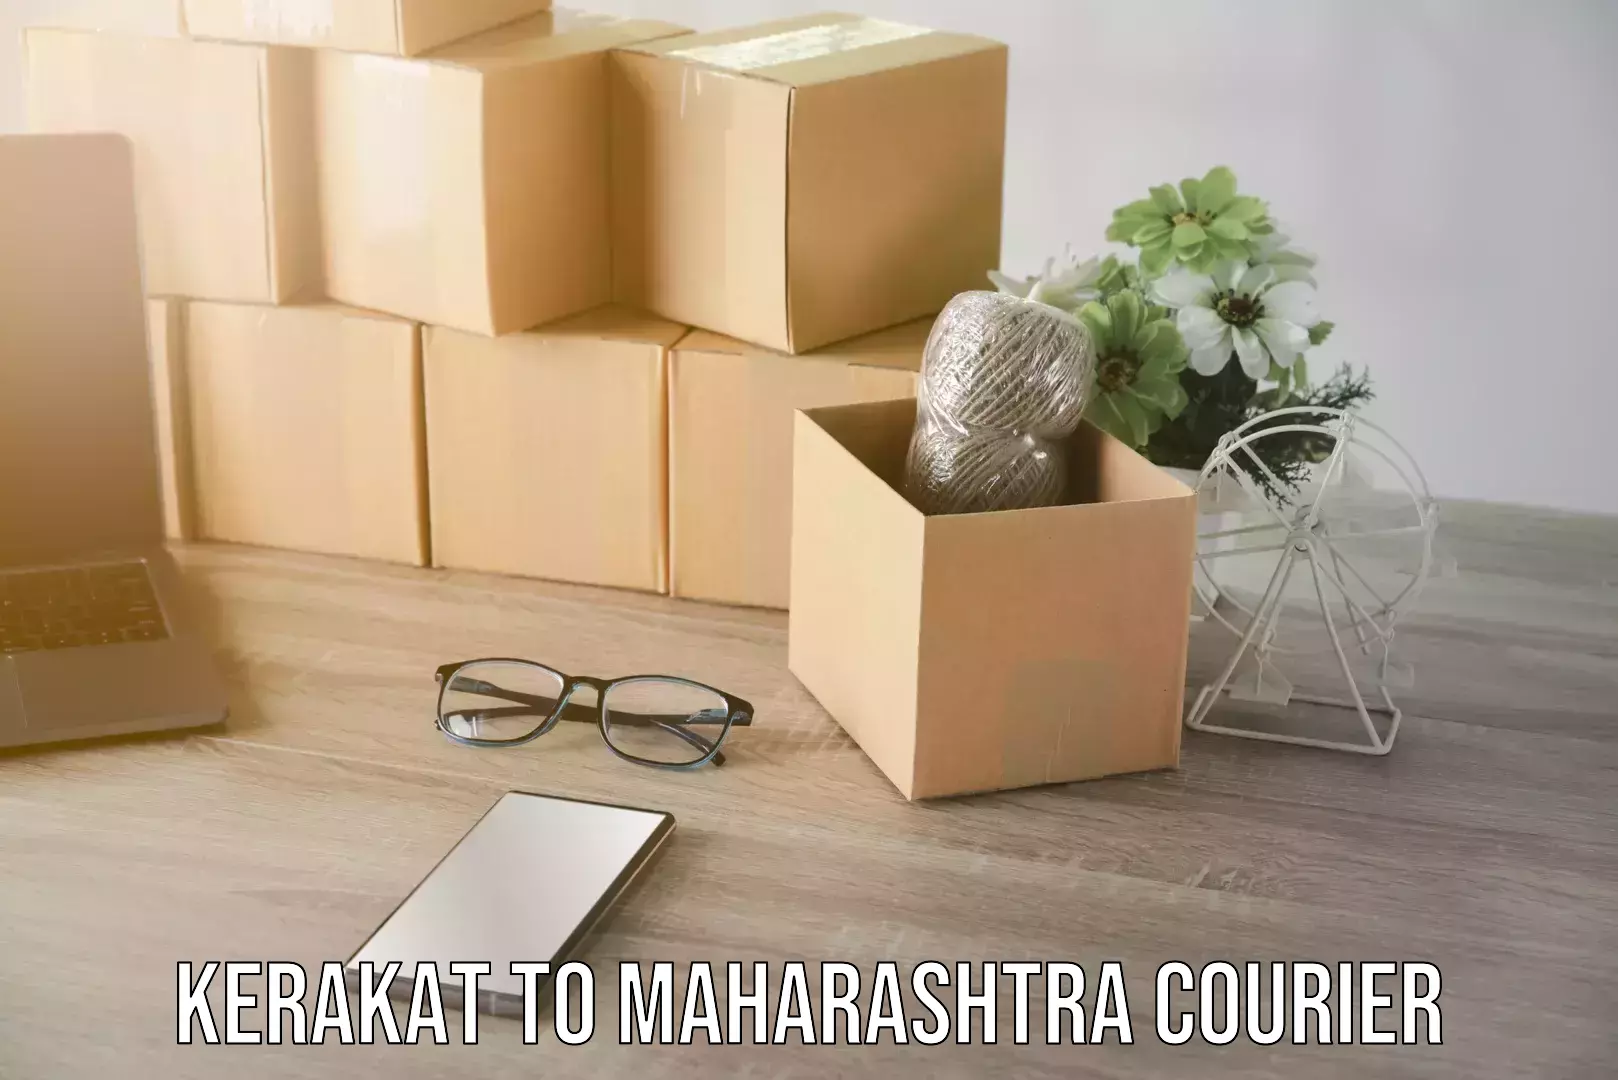 Cost-effective moving options Kerakat to Maharashtra